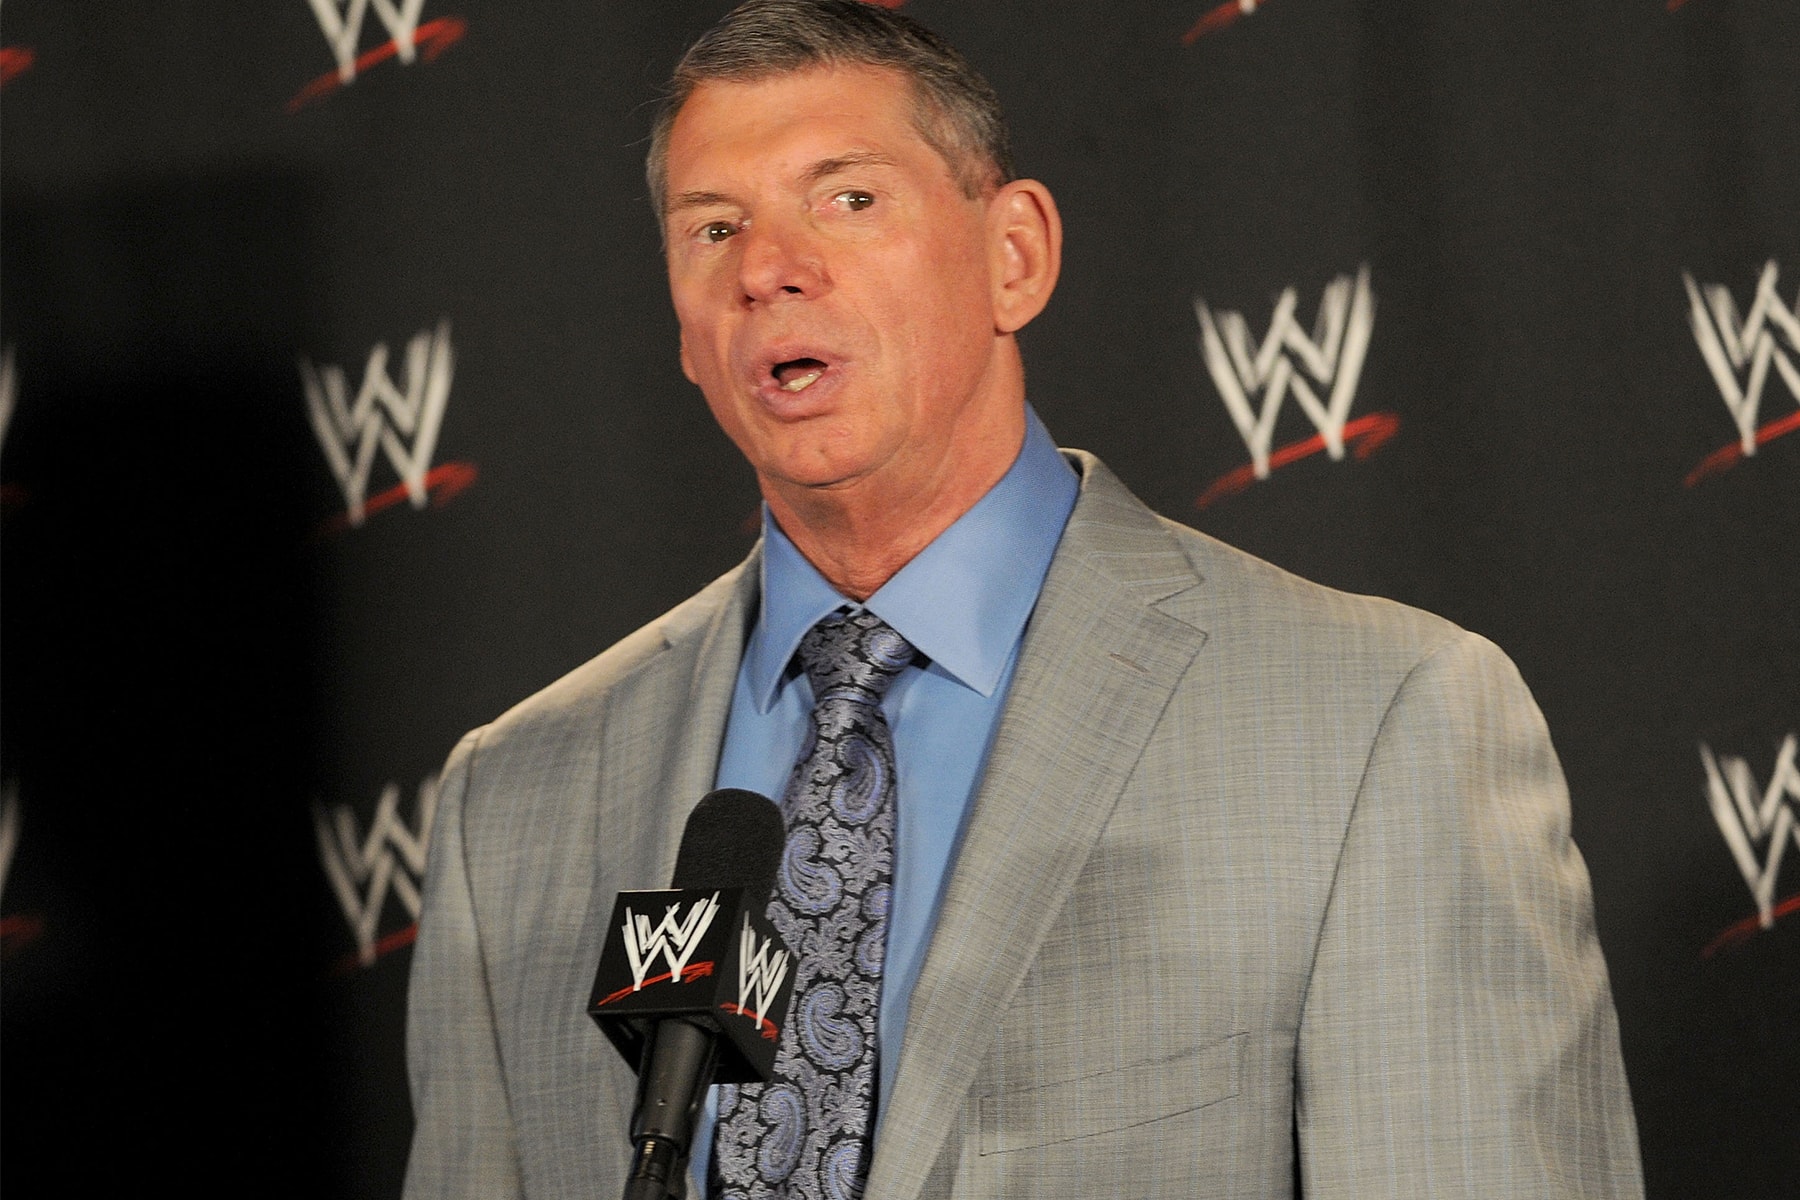 Vince McMahon wwe $3 Million USD Hush money investigation 